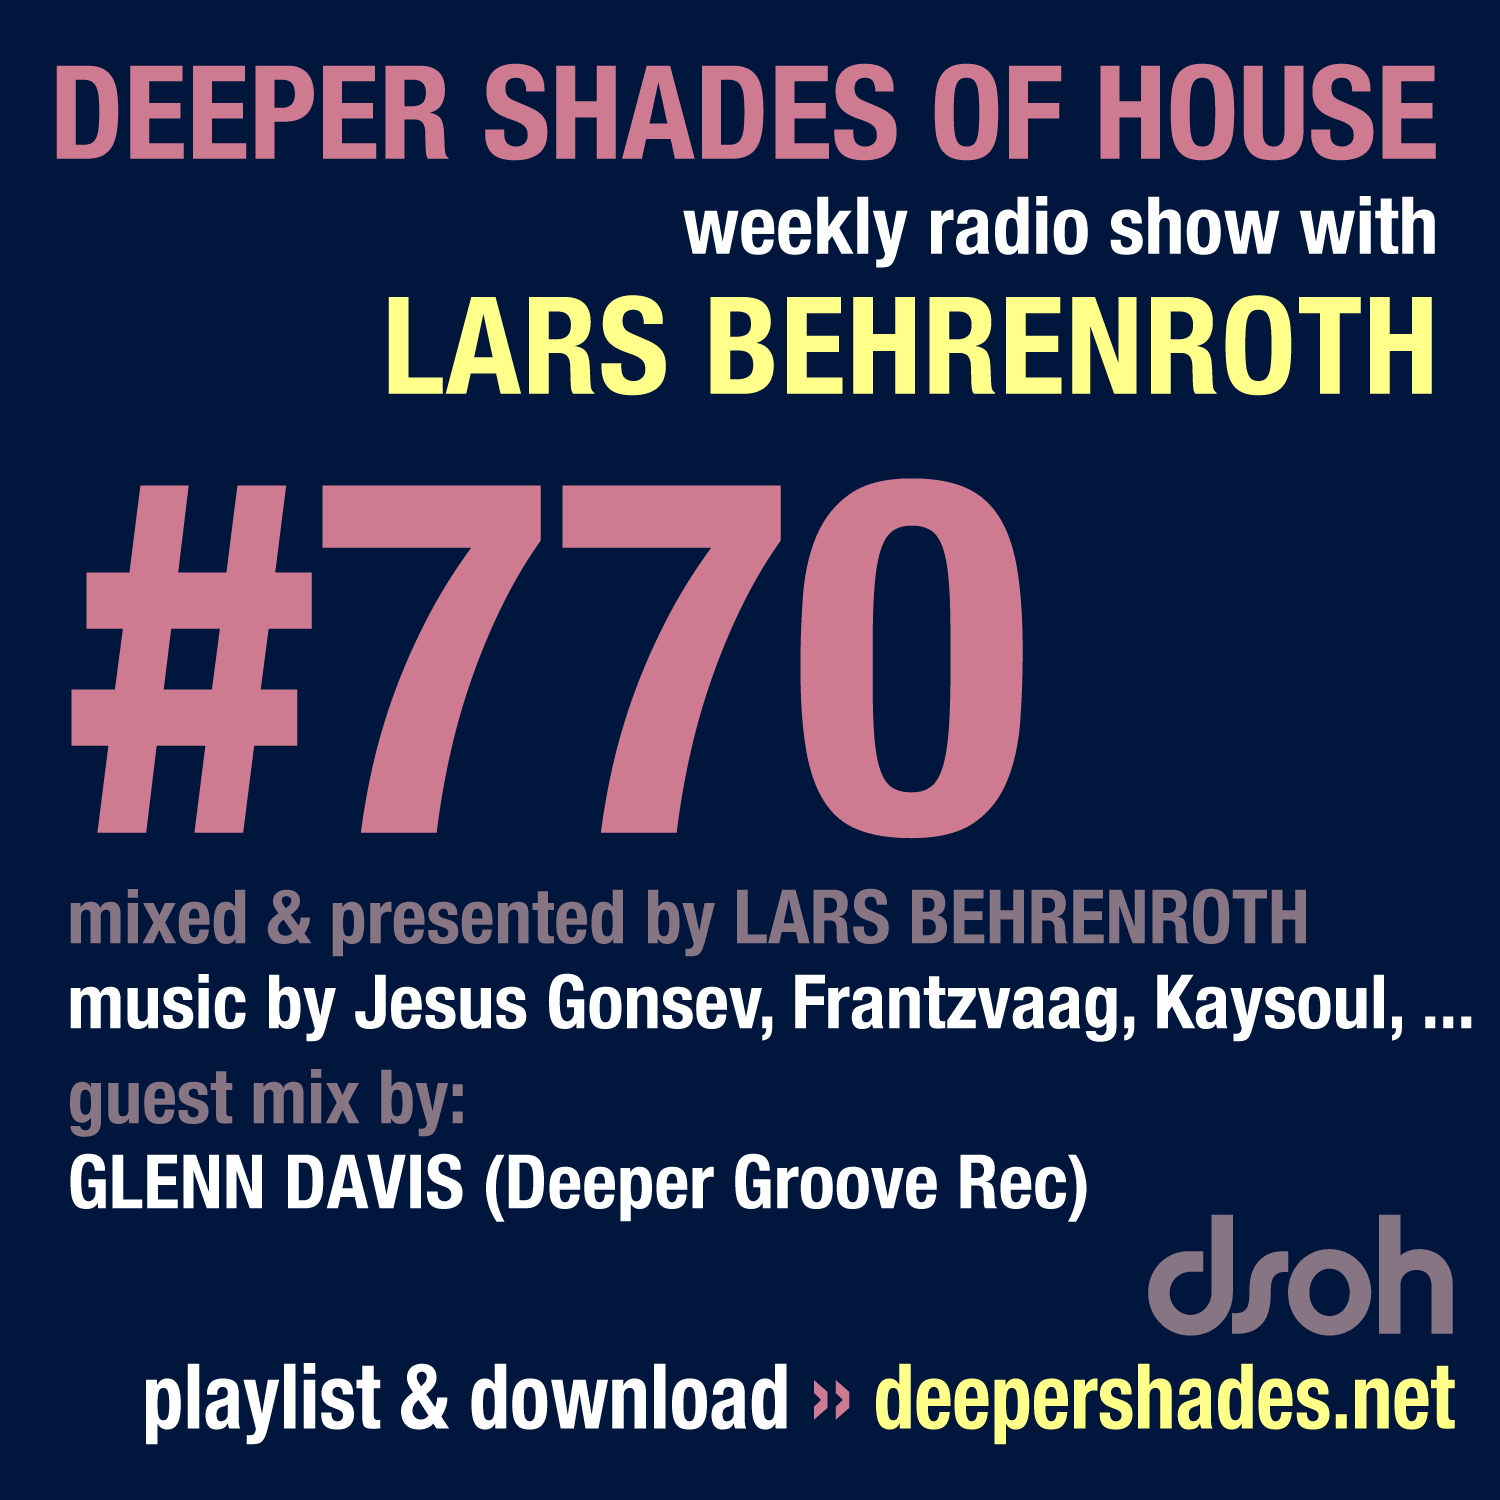 Deep House Radio Show Deeper Shades Of House 770